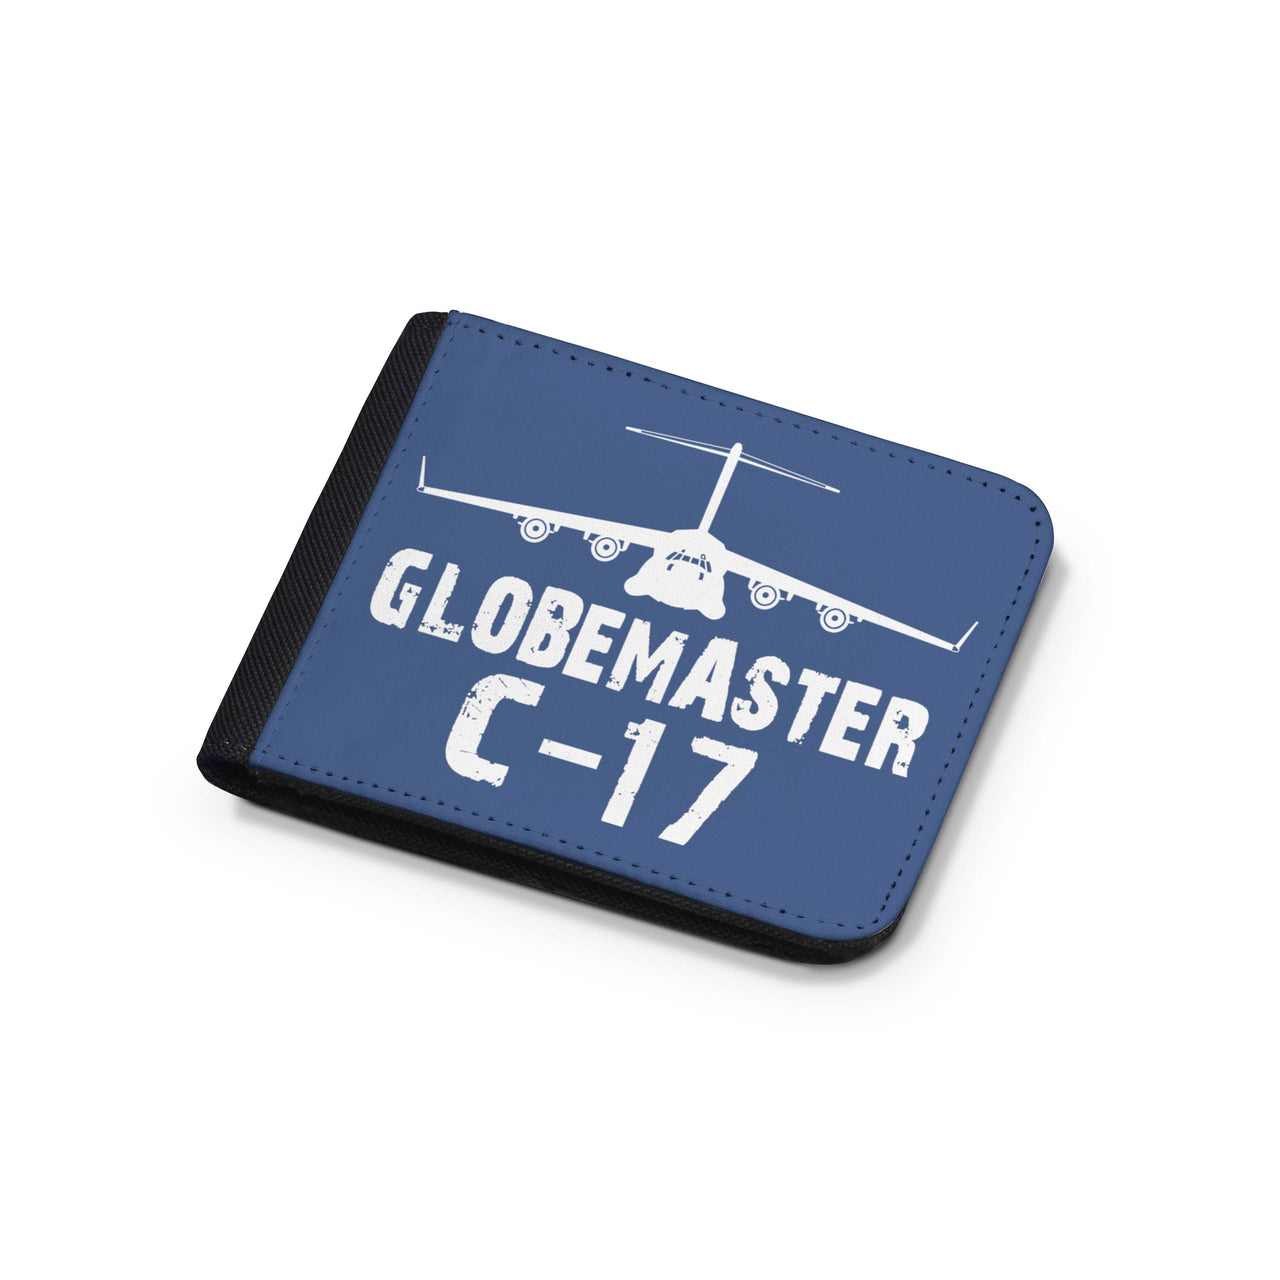 GlobeMaster C-17 & Plane Designed Wallets